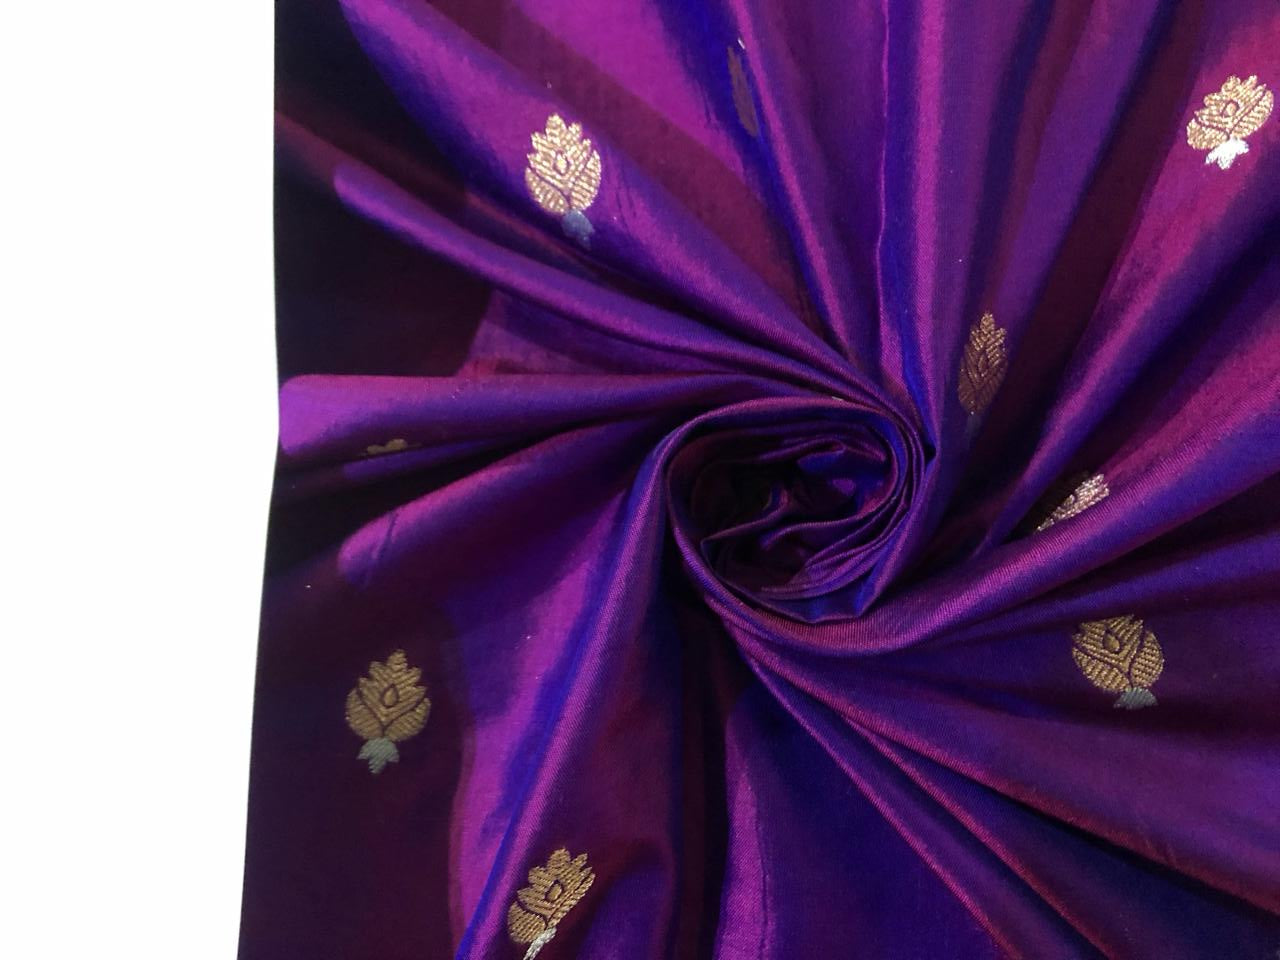 100% PURE Silk Brocade fabric 44" wide pink x purple 2 tone with small metallic gold ,silver motifs